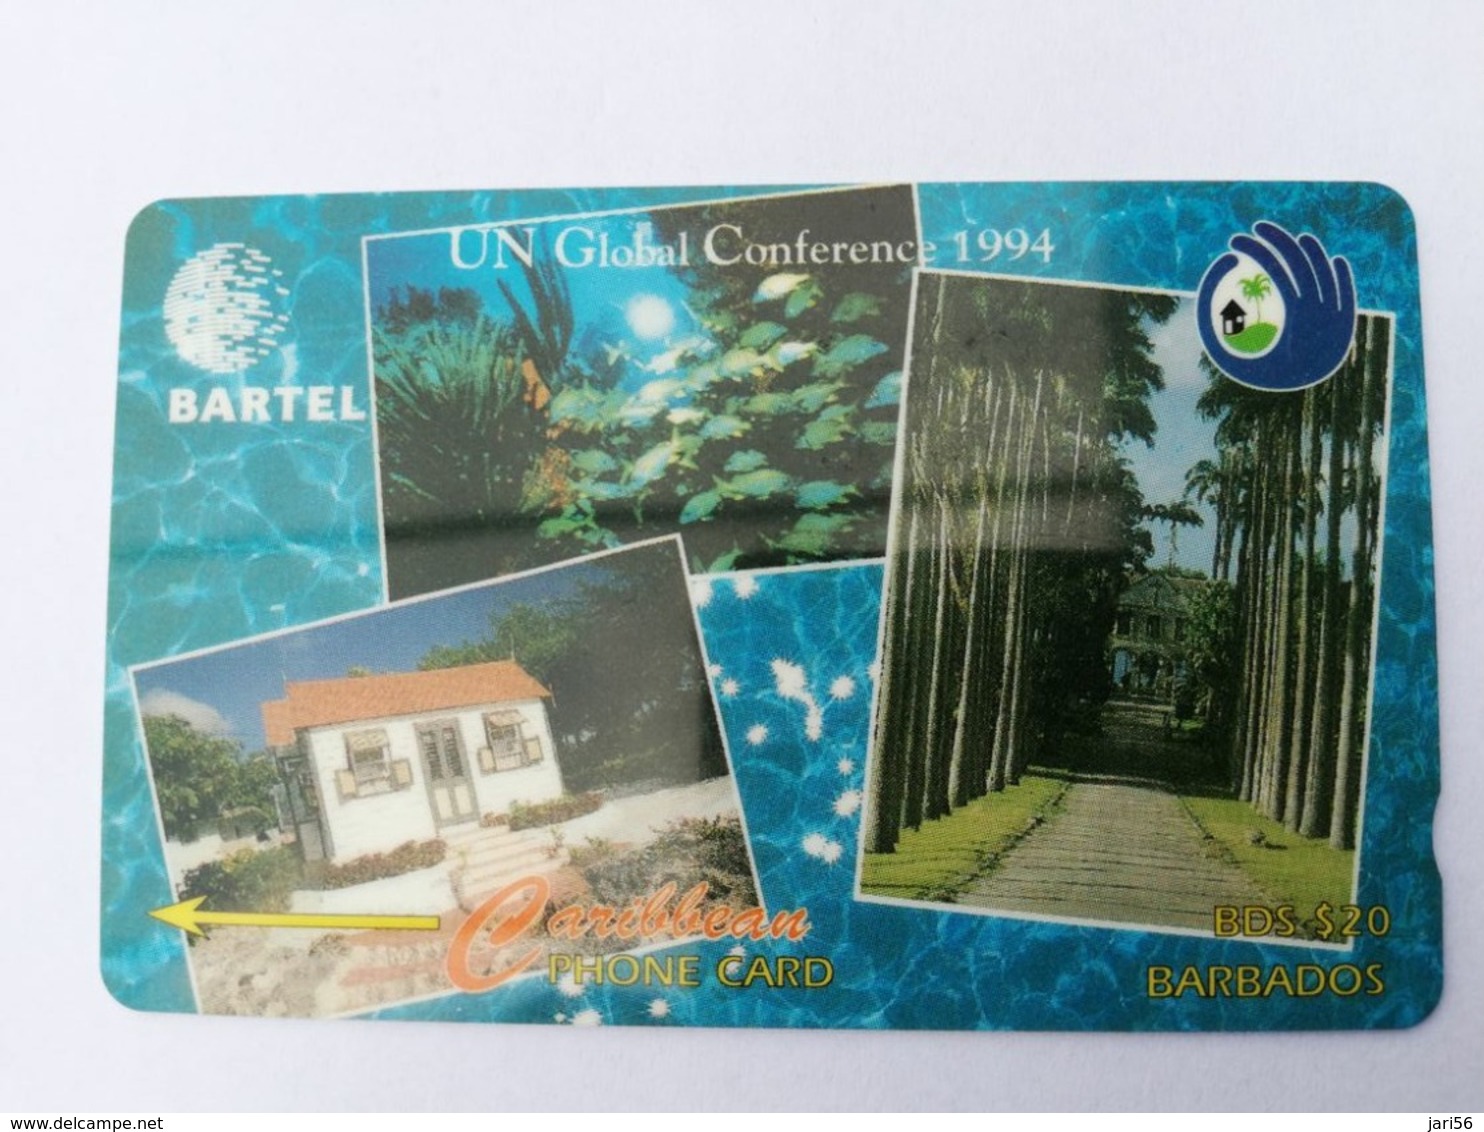 BARBADOS   $20-  Gpt Magnetic     BAR-15B  15CBDB  UN GLOBAL CONF 1994     NEW  LOGO   Very Fine Used  Card  ** 2891** - Barbados